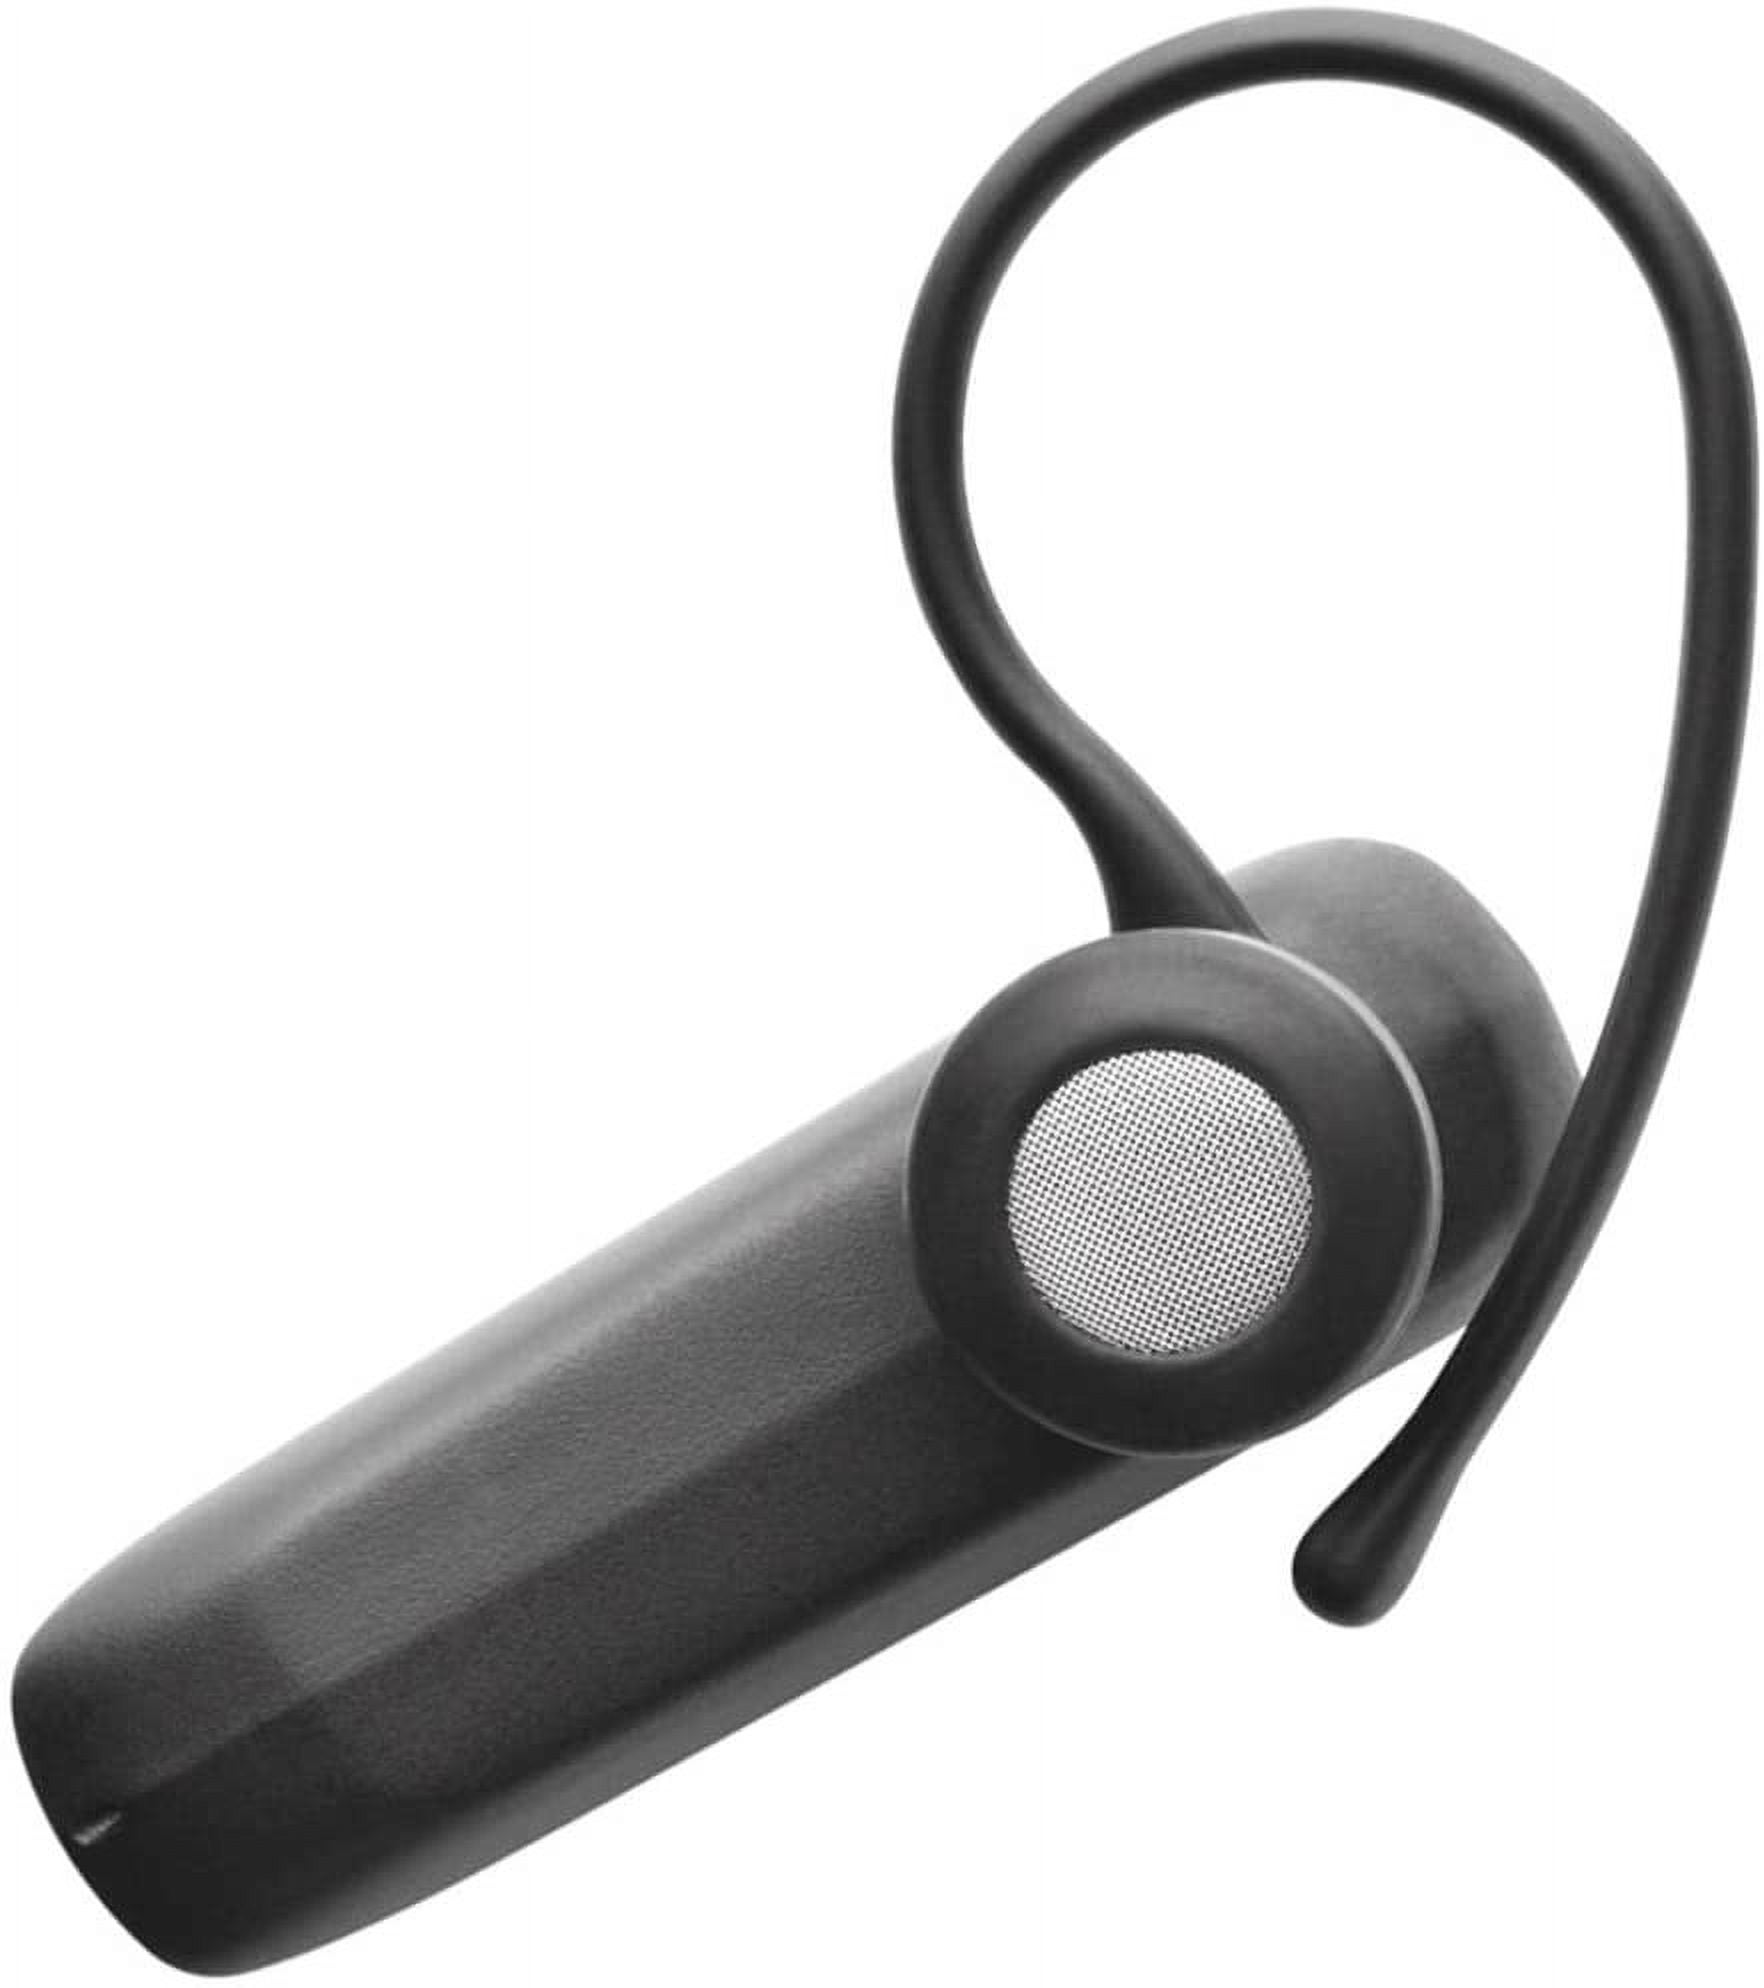 Oreillette Micro-casque Jabra BT2046 - Bluetooth sans fil (100